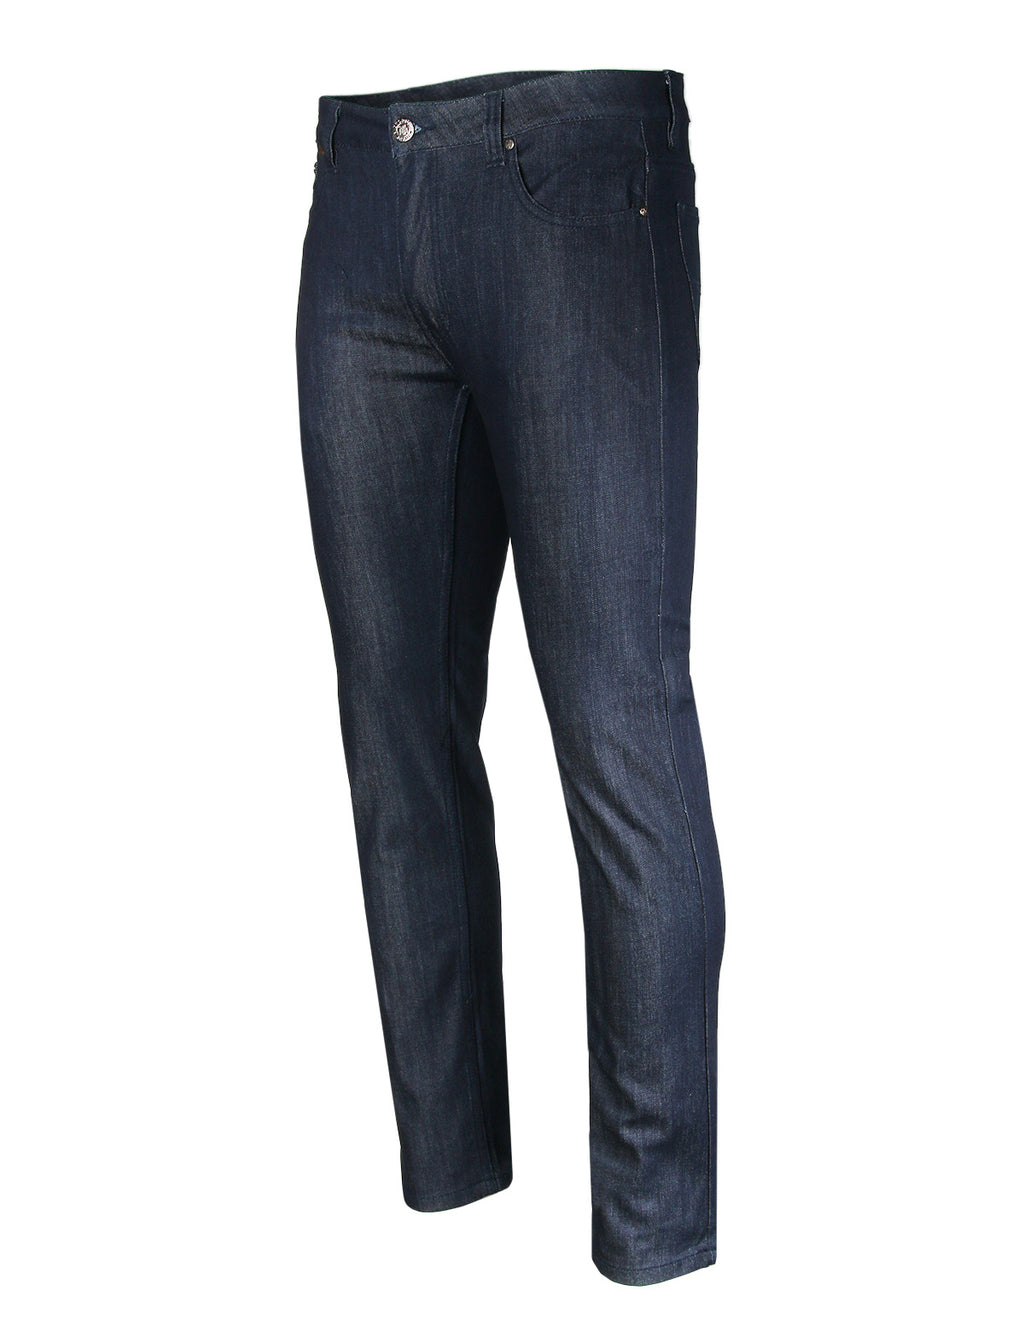 ZIMEGO Men's Slim Cut Skinny Fit Stretch Raw Denim Pants Classic Five Pocket Jeans - INDIGO